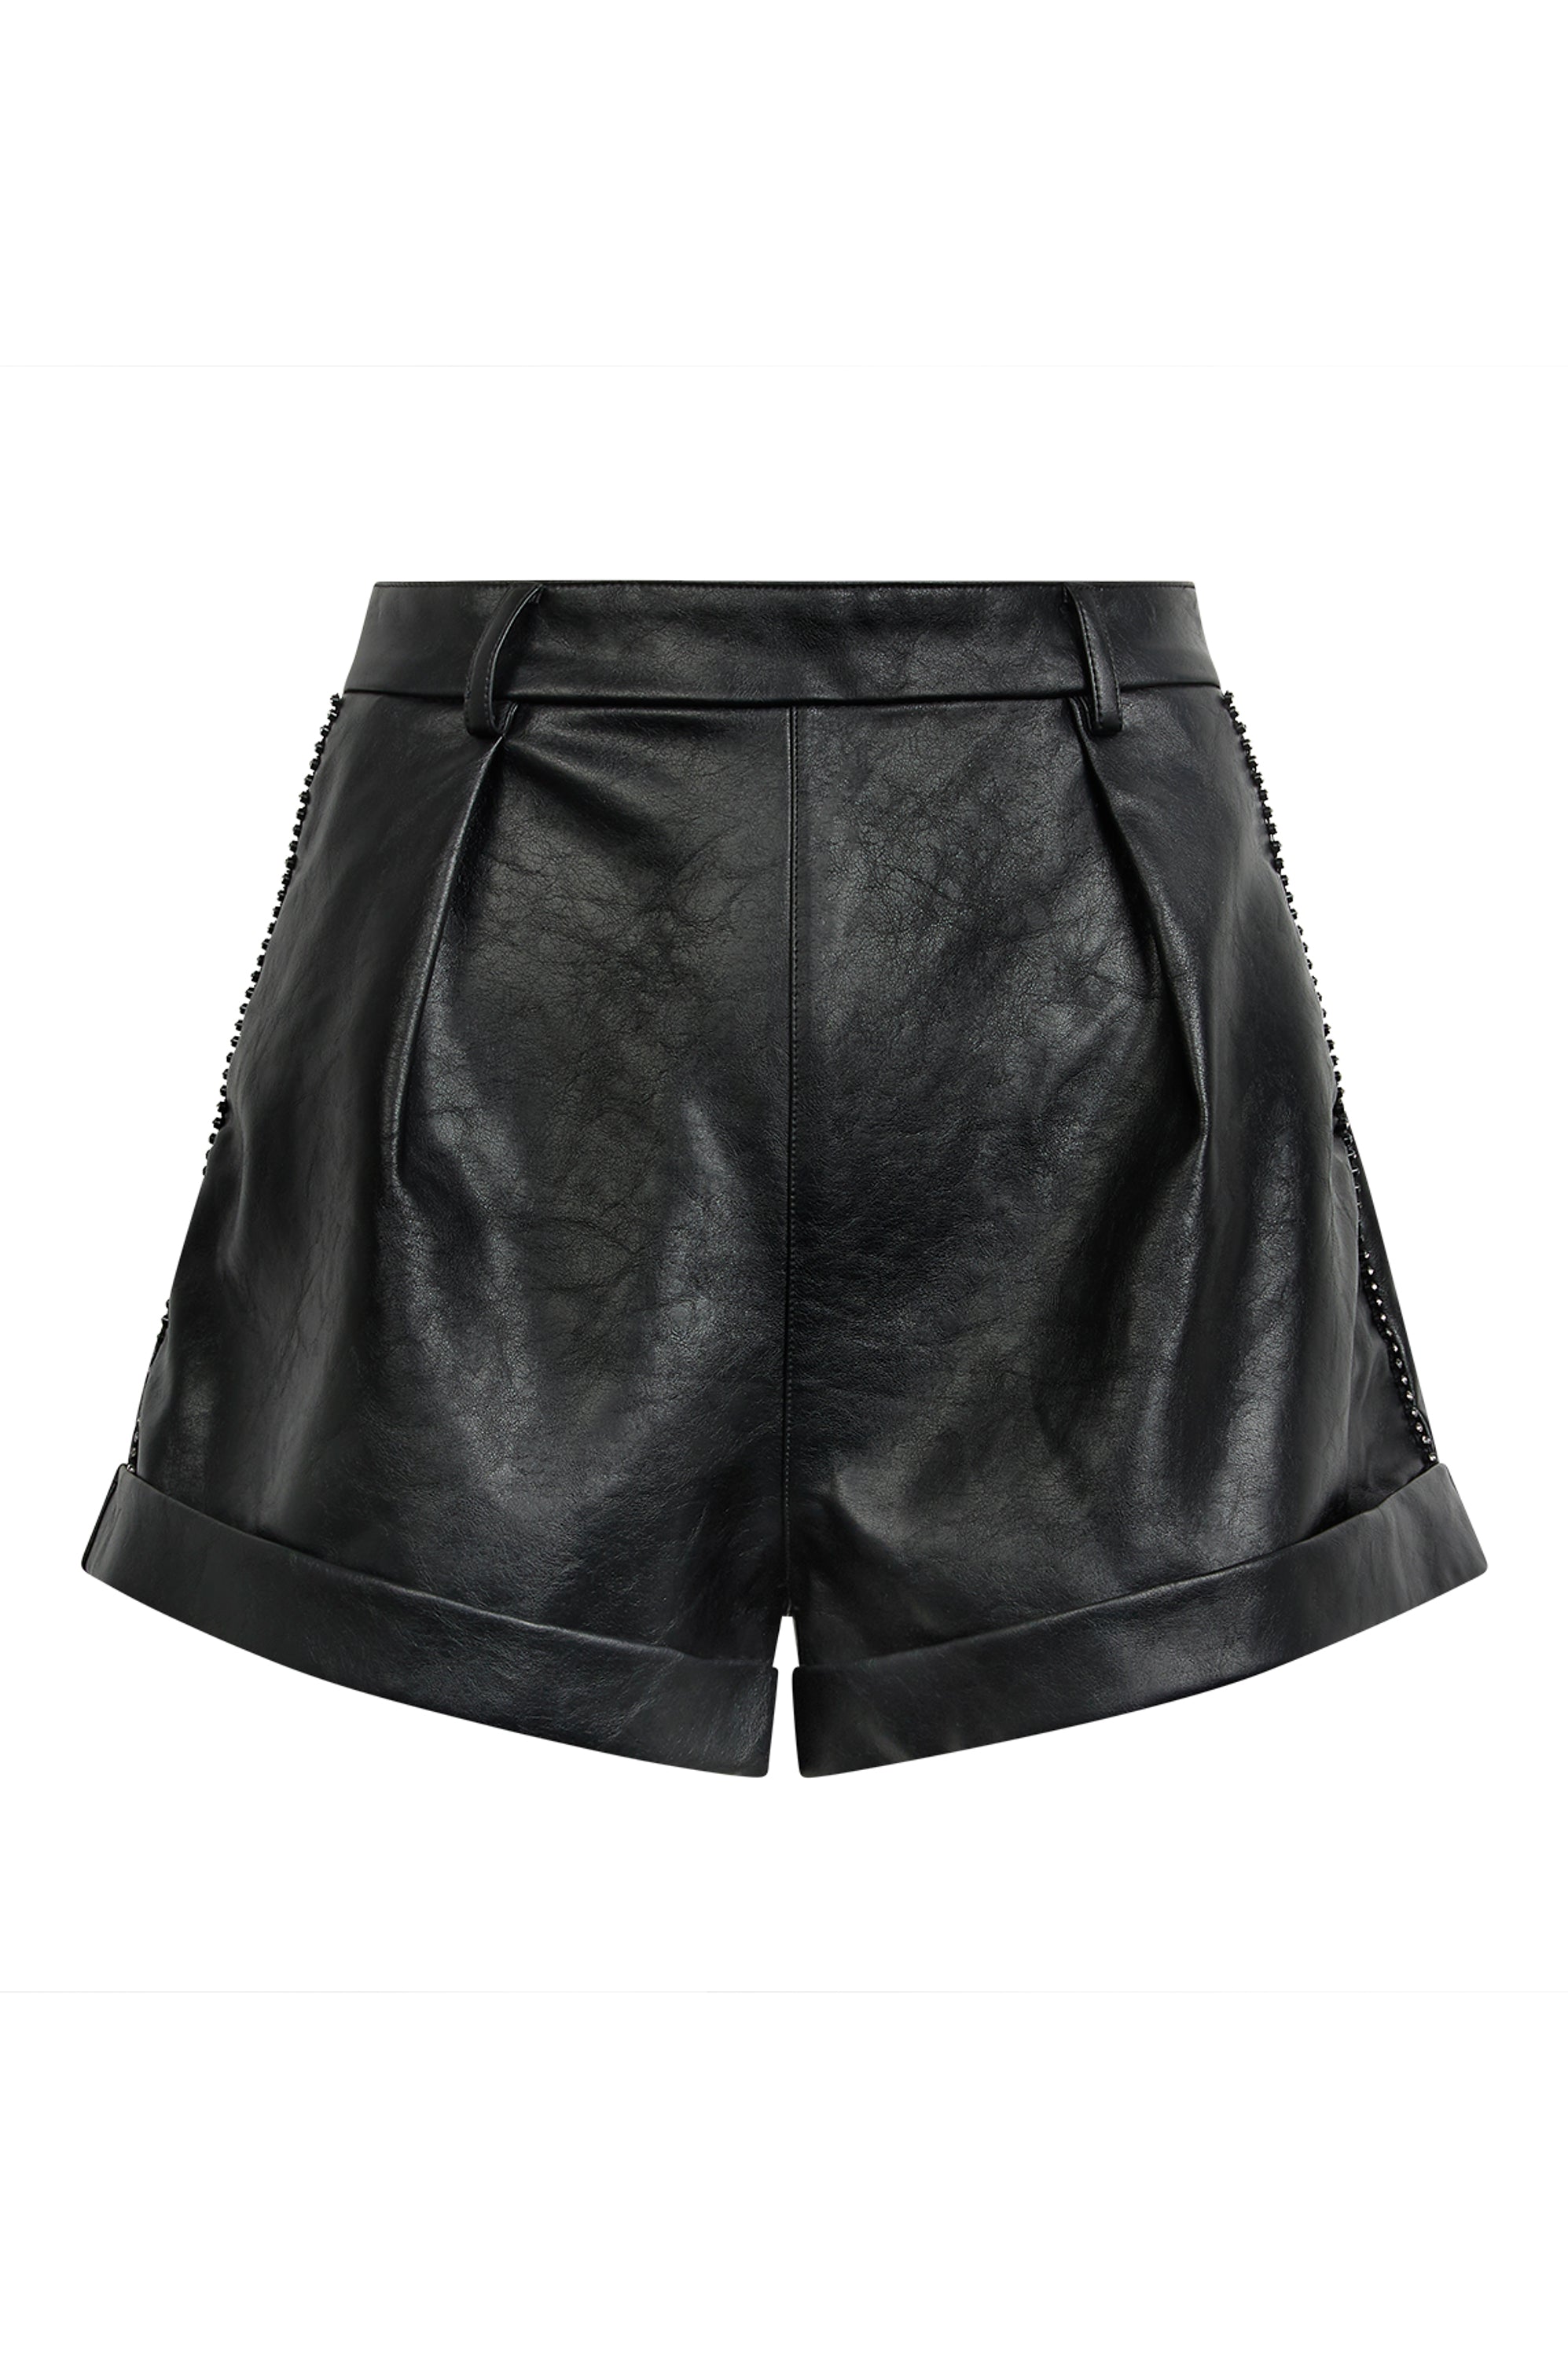 LORENZA Black Diamante PU Leather Shorts